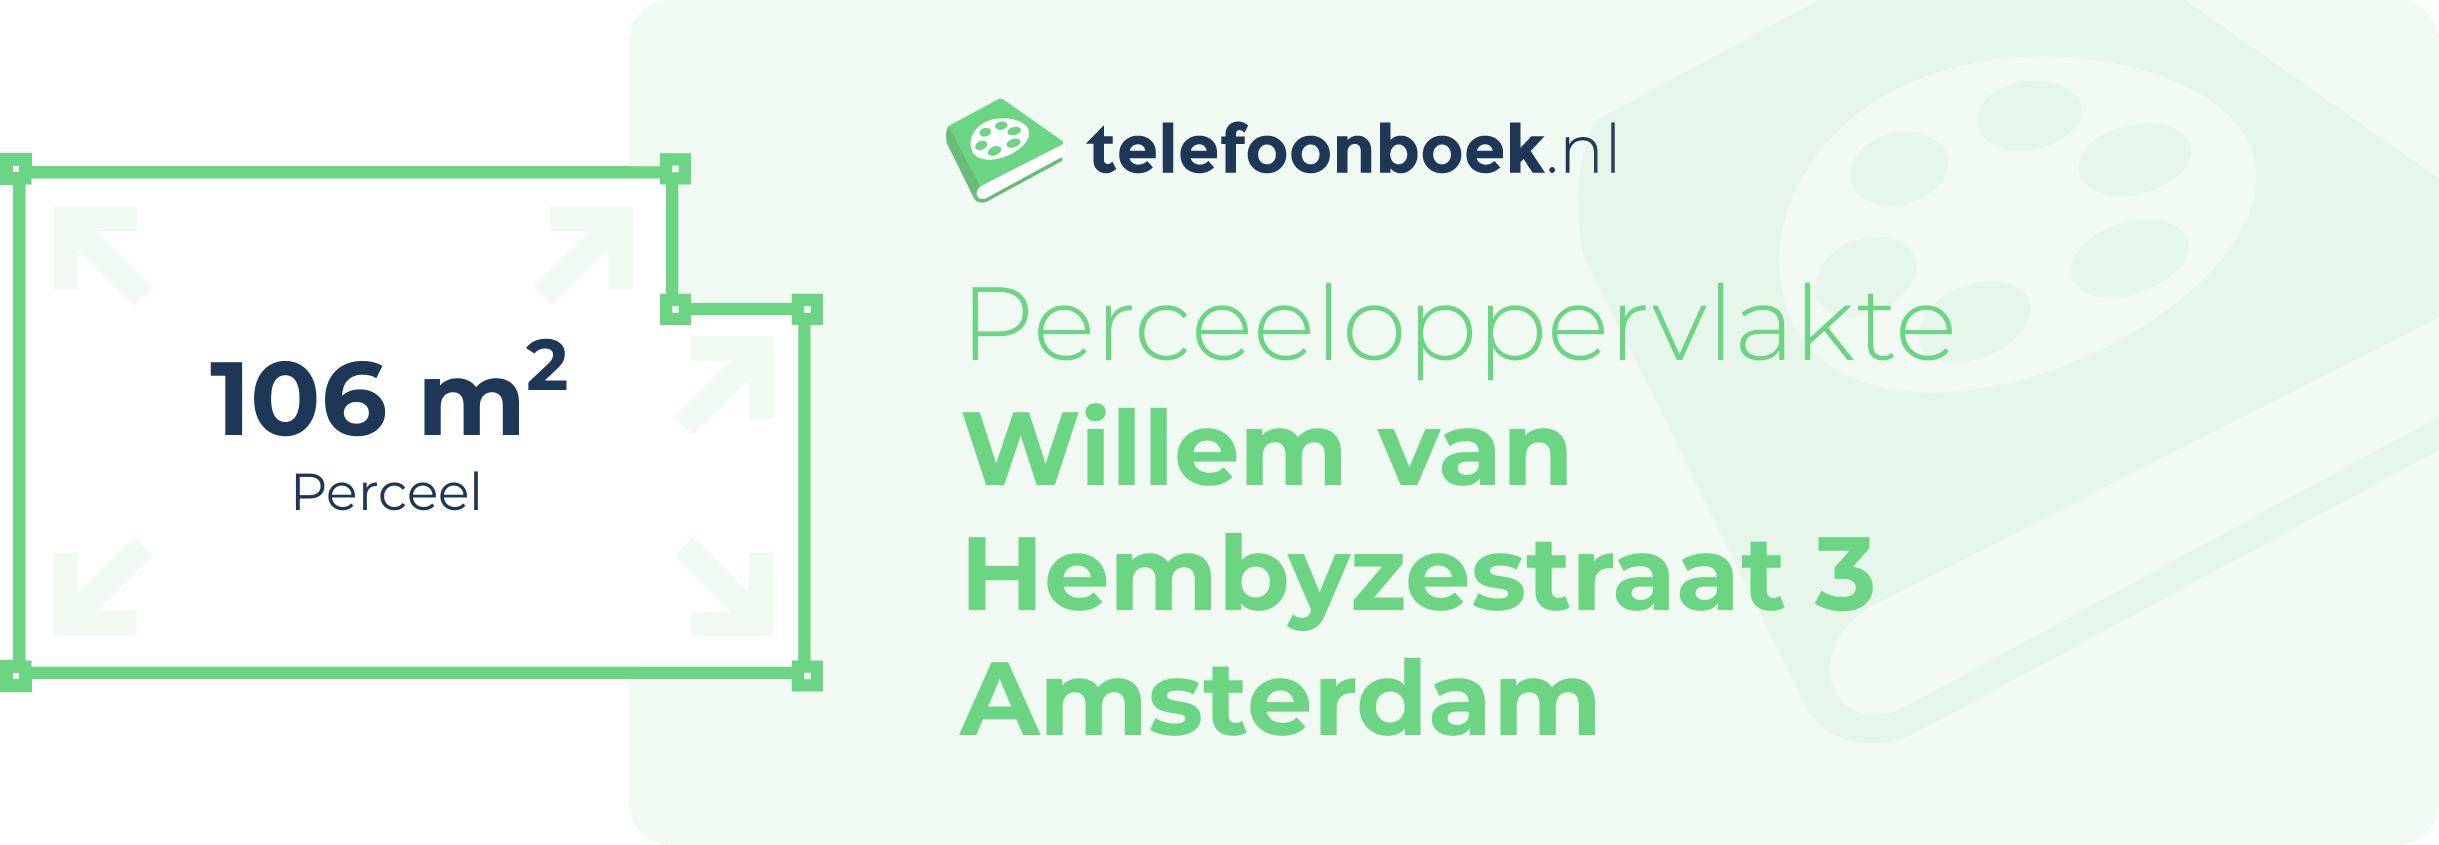 Perceeloppervlakte Willem Van Hembyzestraat 3 Amsterdam